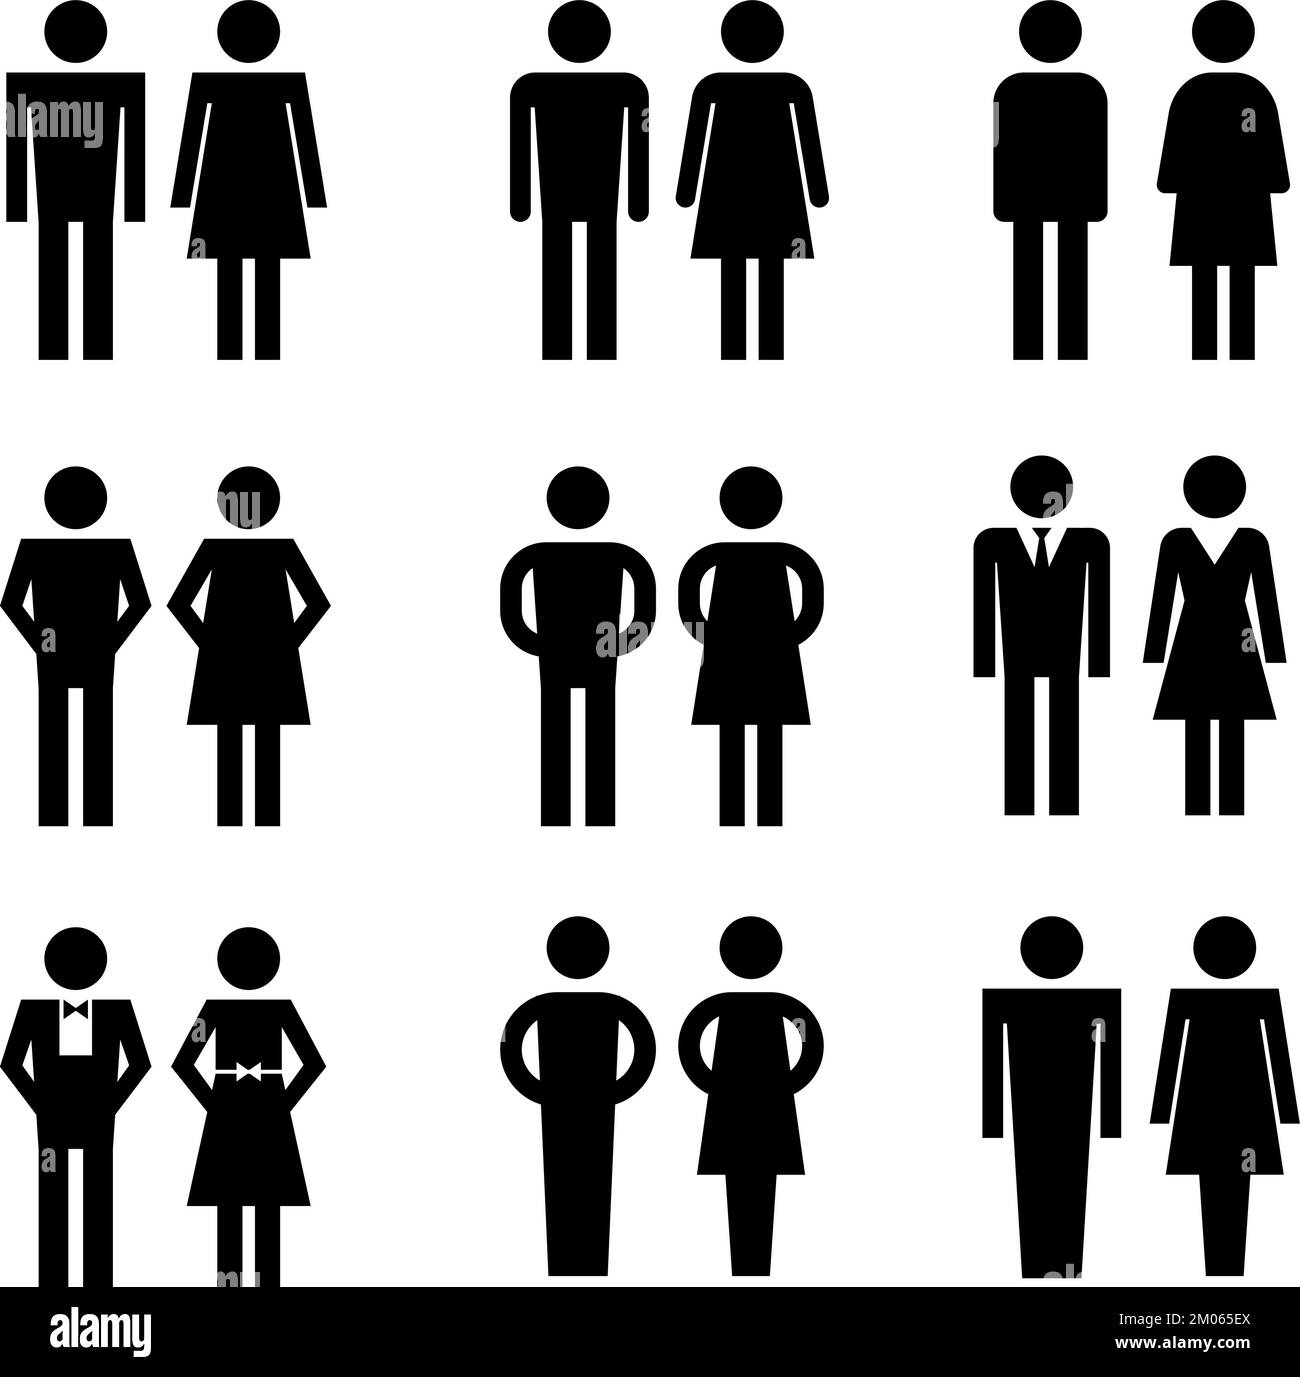 Public toilet vector signs. Woman and man hygiene washrooms symbols. Black ladies and gentlemen wc restroom door pictograms. Illustration of restroom toilet for man and woman Stock Vector